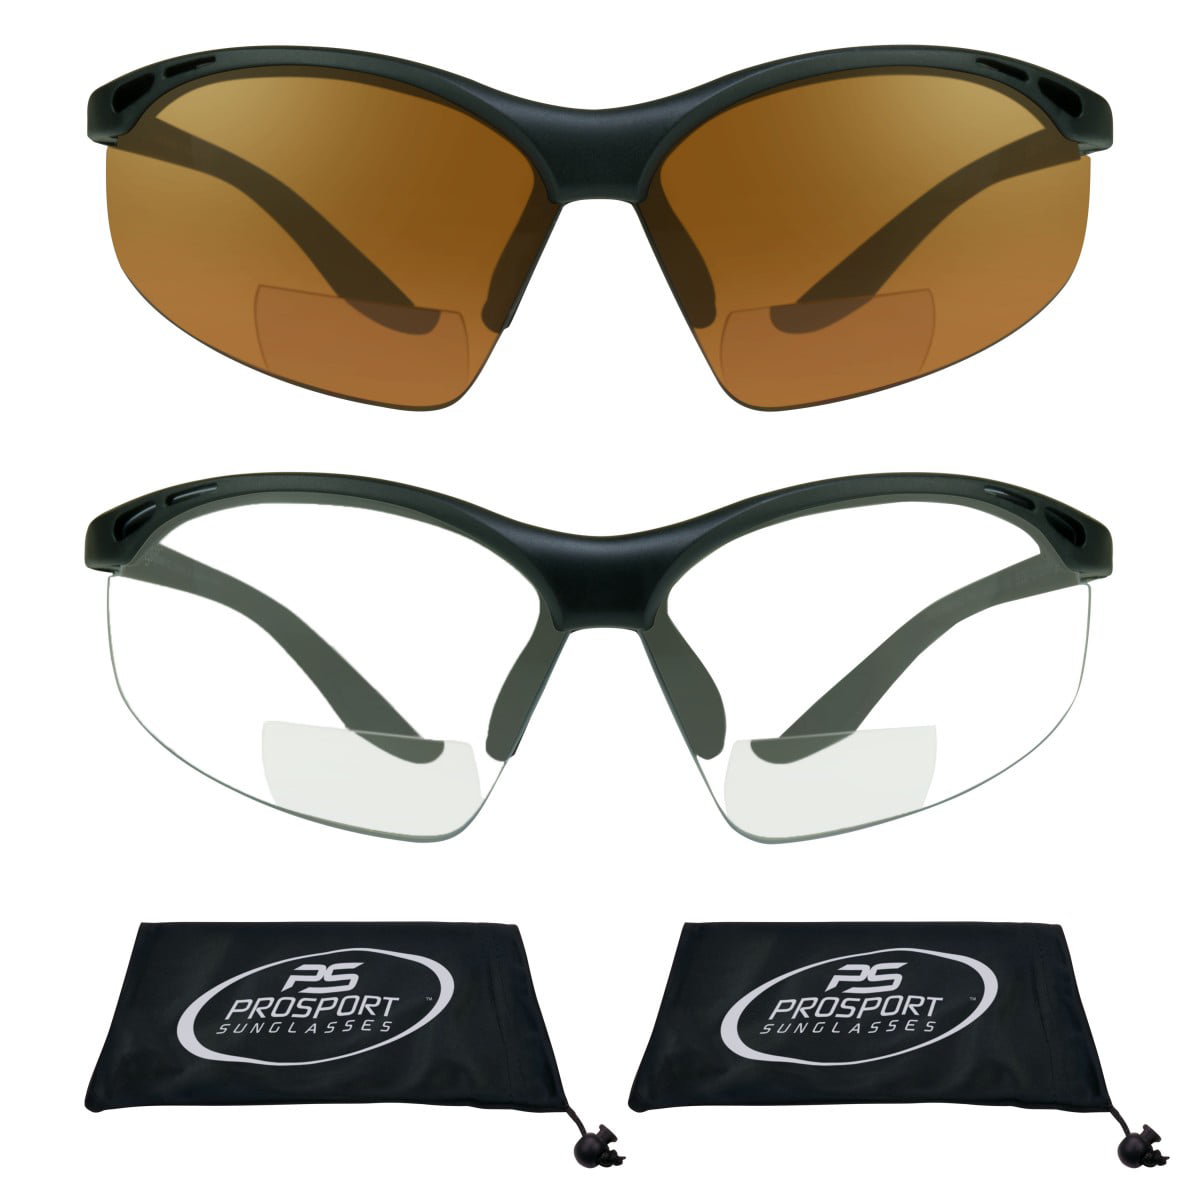 Prosport Sunglasses Prosport 2 Pairs Safety Bifocal Reading Glasses